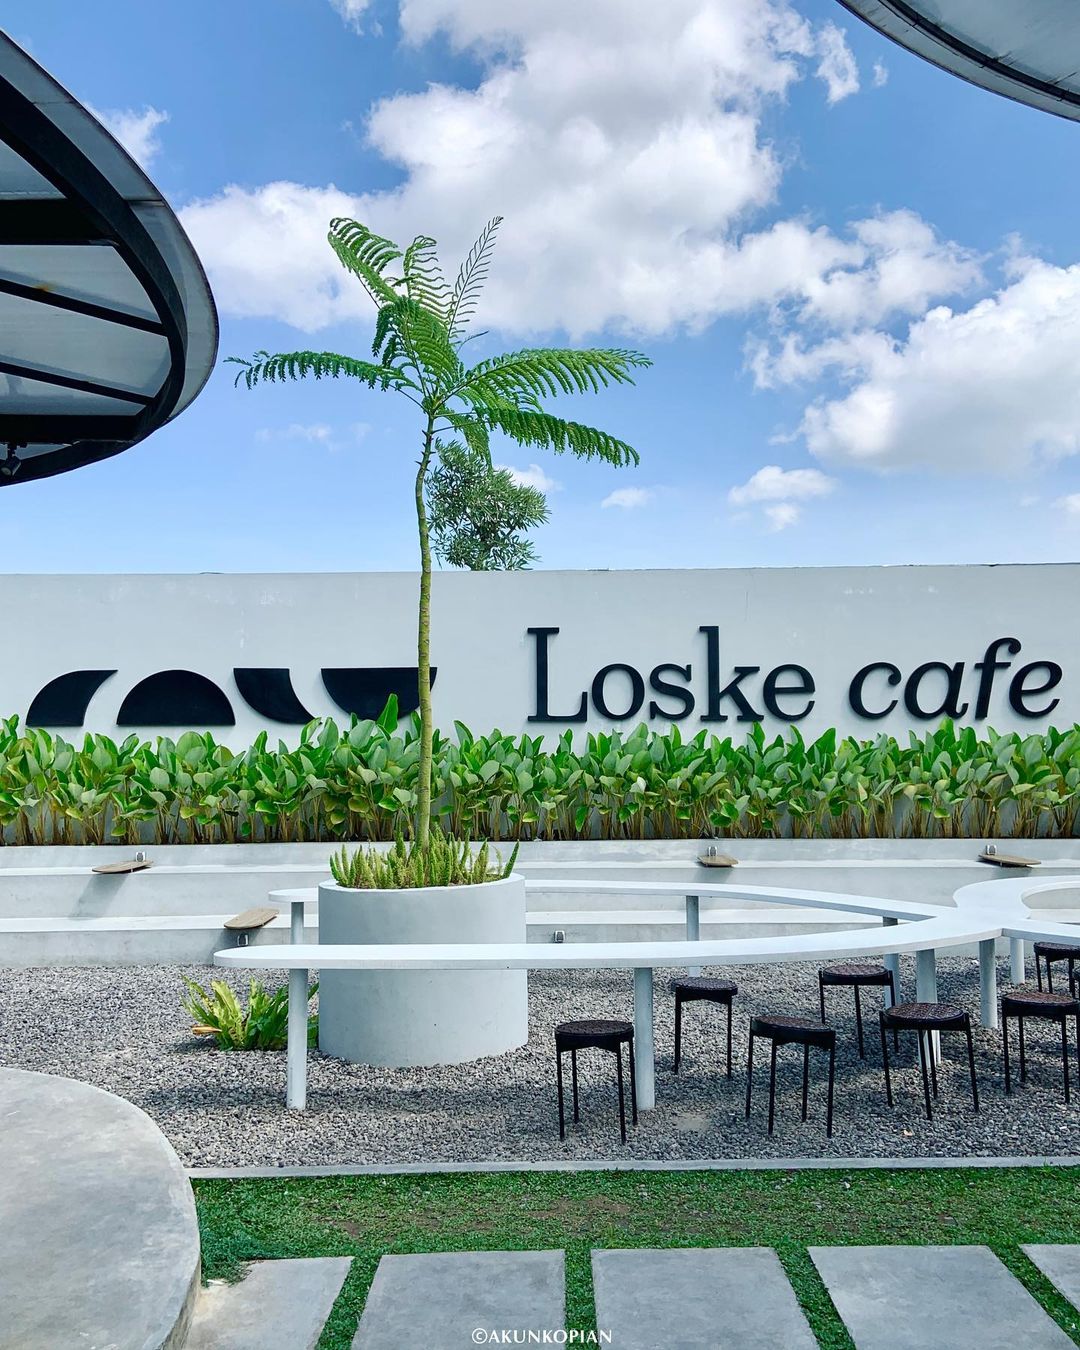 Lokasi Loske Cafe Solo Image From @akunkopian